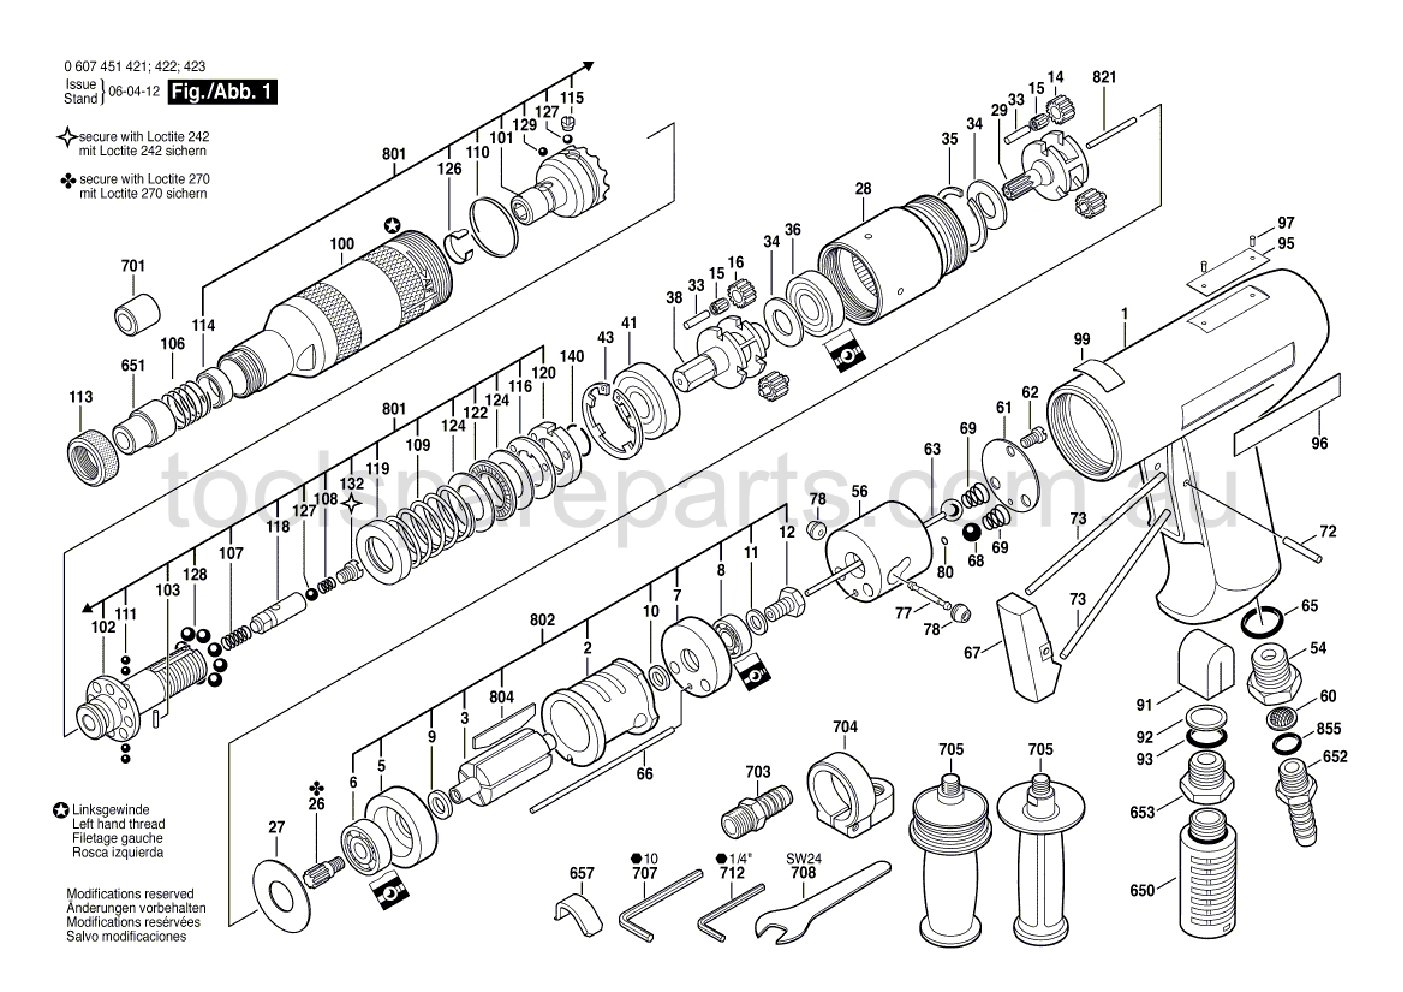 Bosch 370 WATT-SERIE 0607451421  Diagram 1